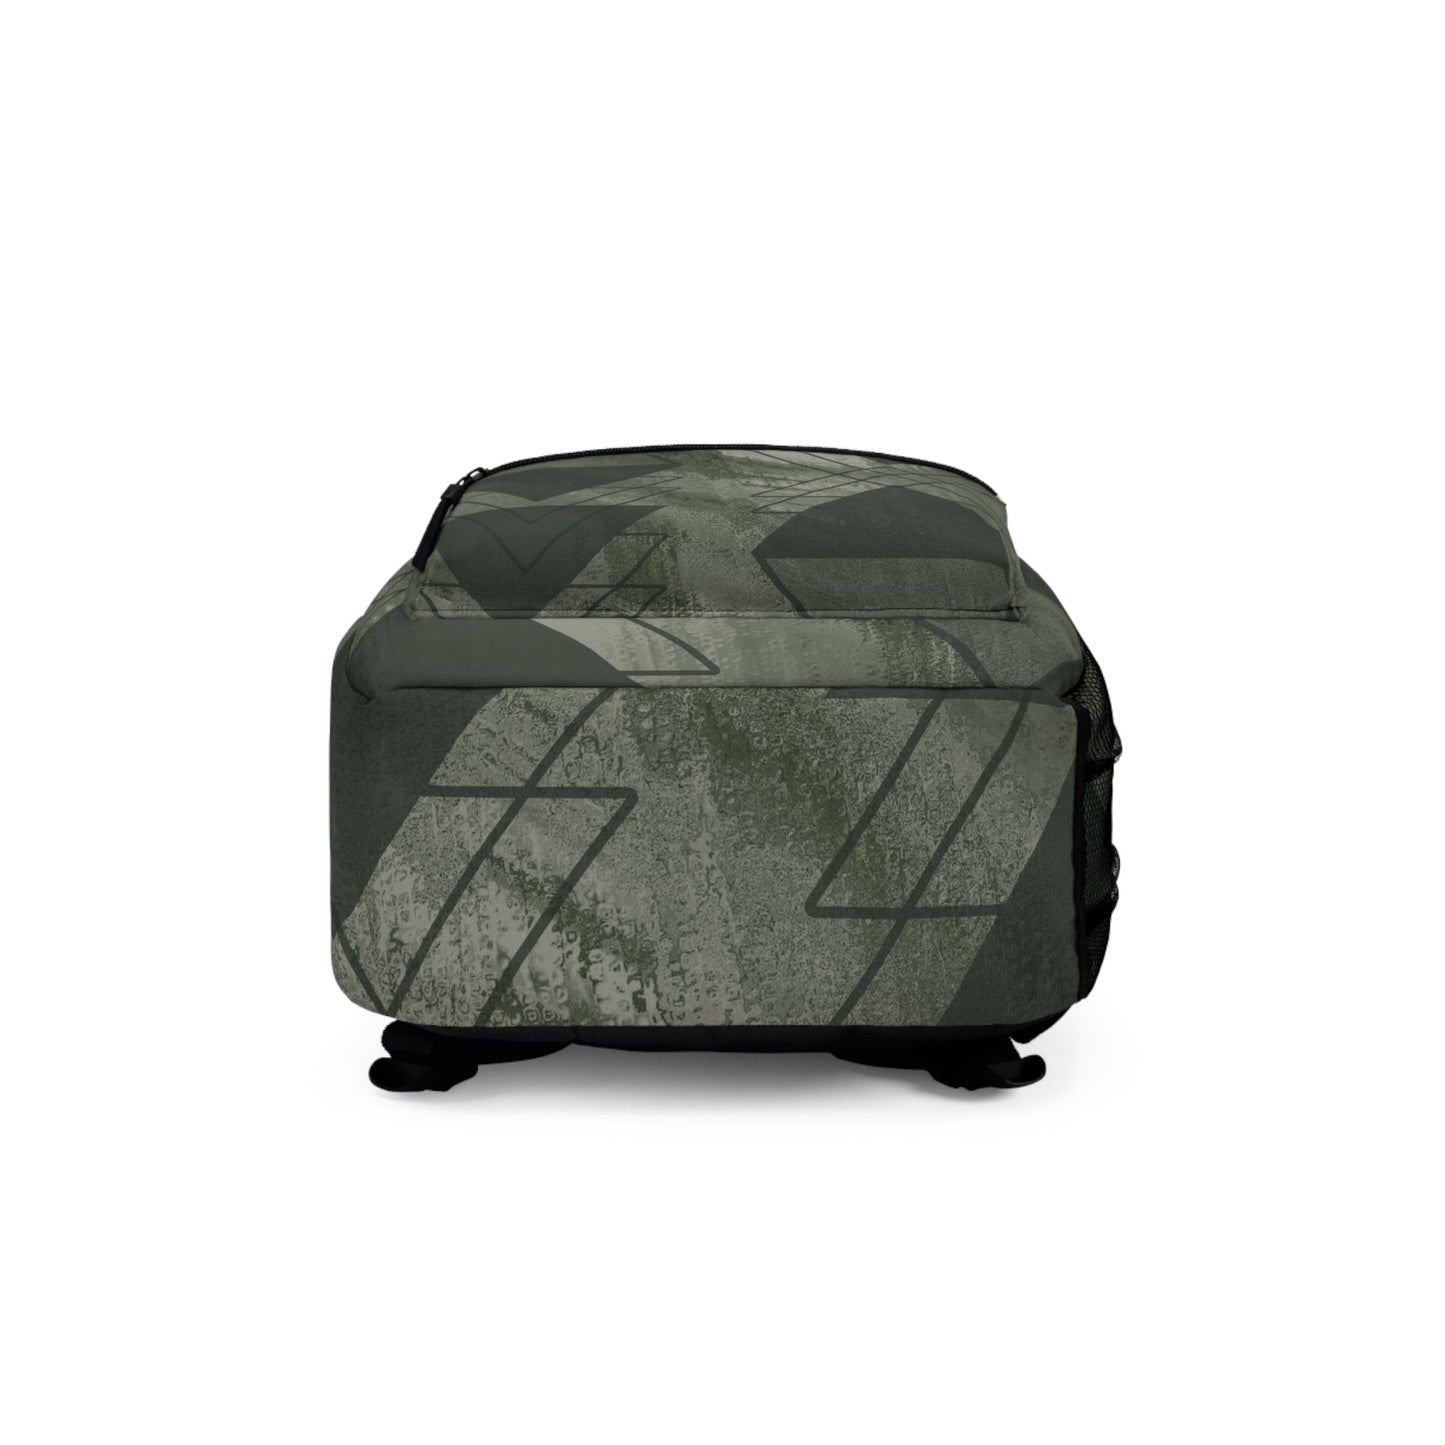 Backpack - Large Water-Resistant Bag, Olive Green Triangular